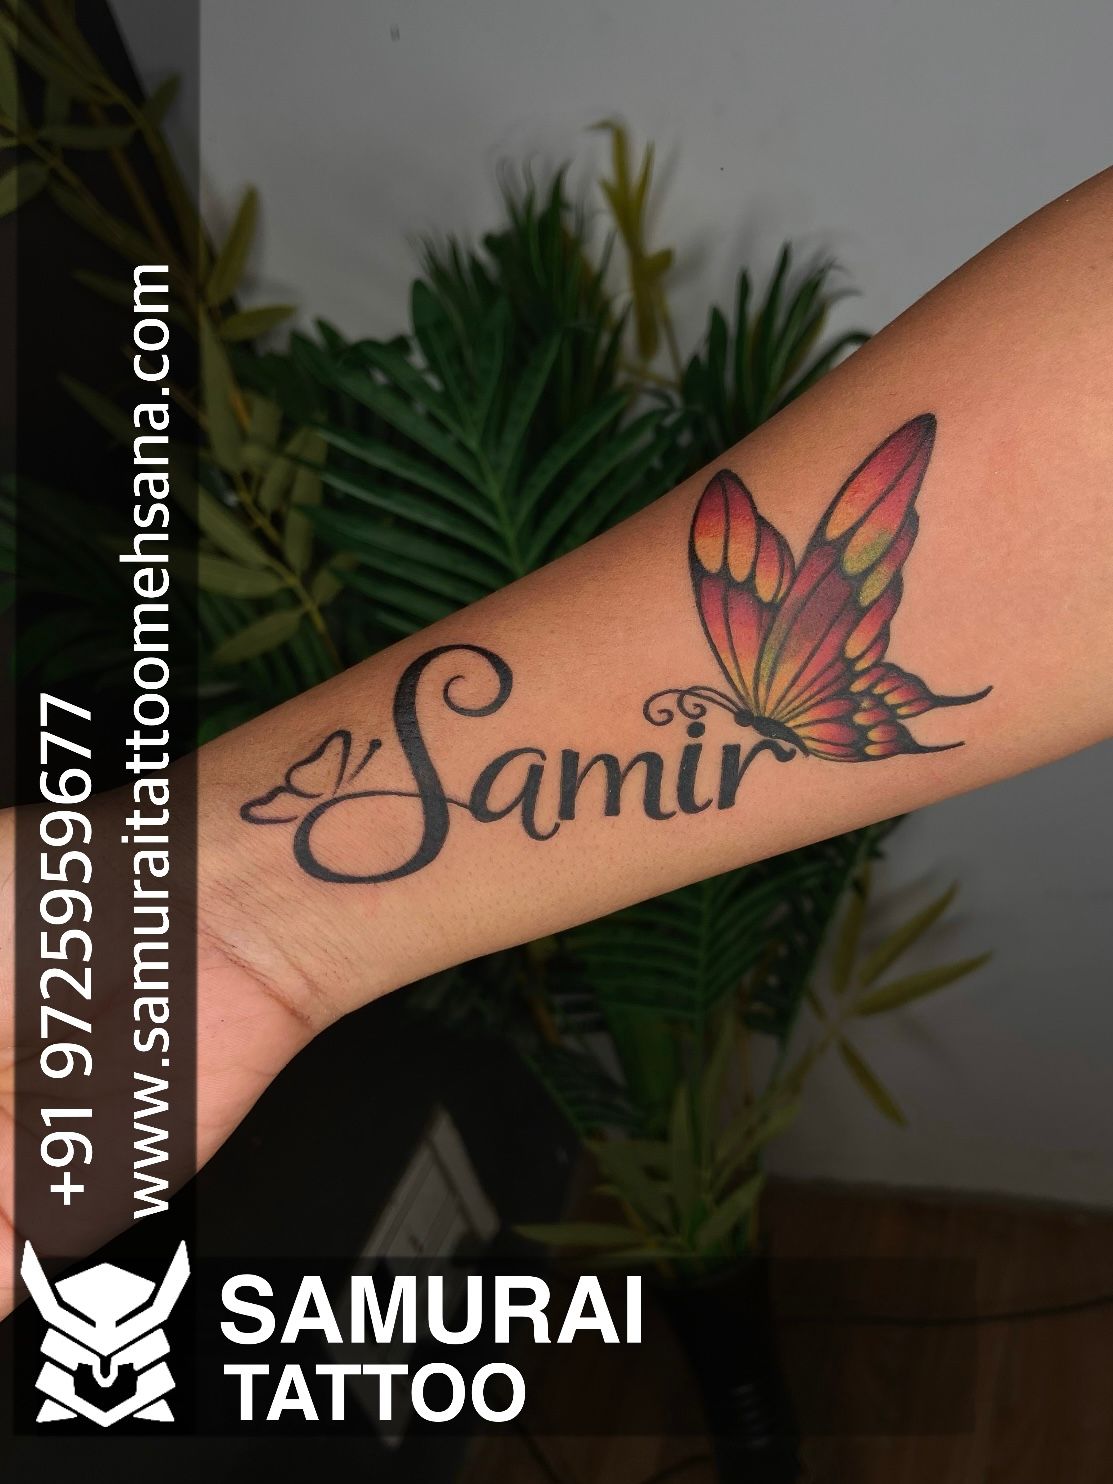 Samir tattoo | CharlesFred | Flickr